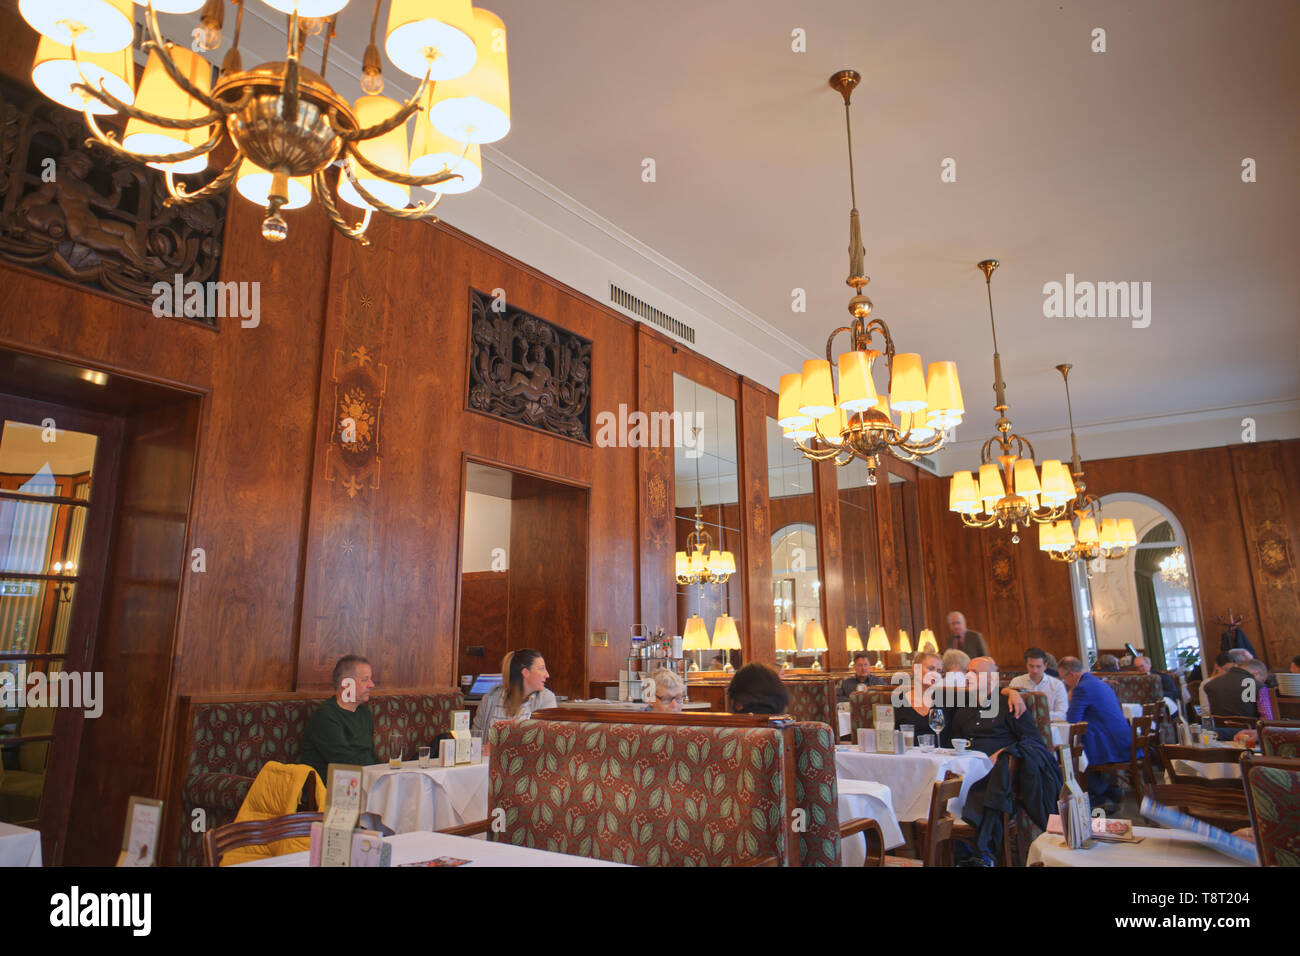 Historic Cafe Landtmann, interior, Vienna, Austria Stock Photo